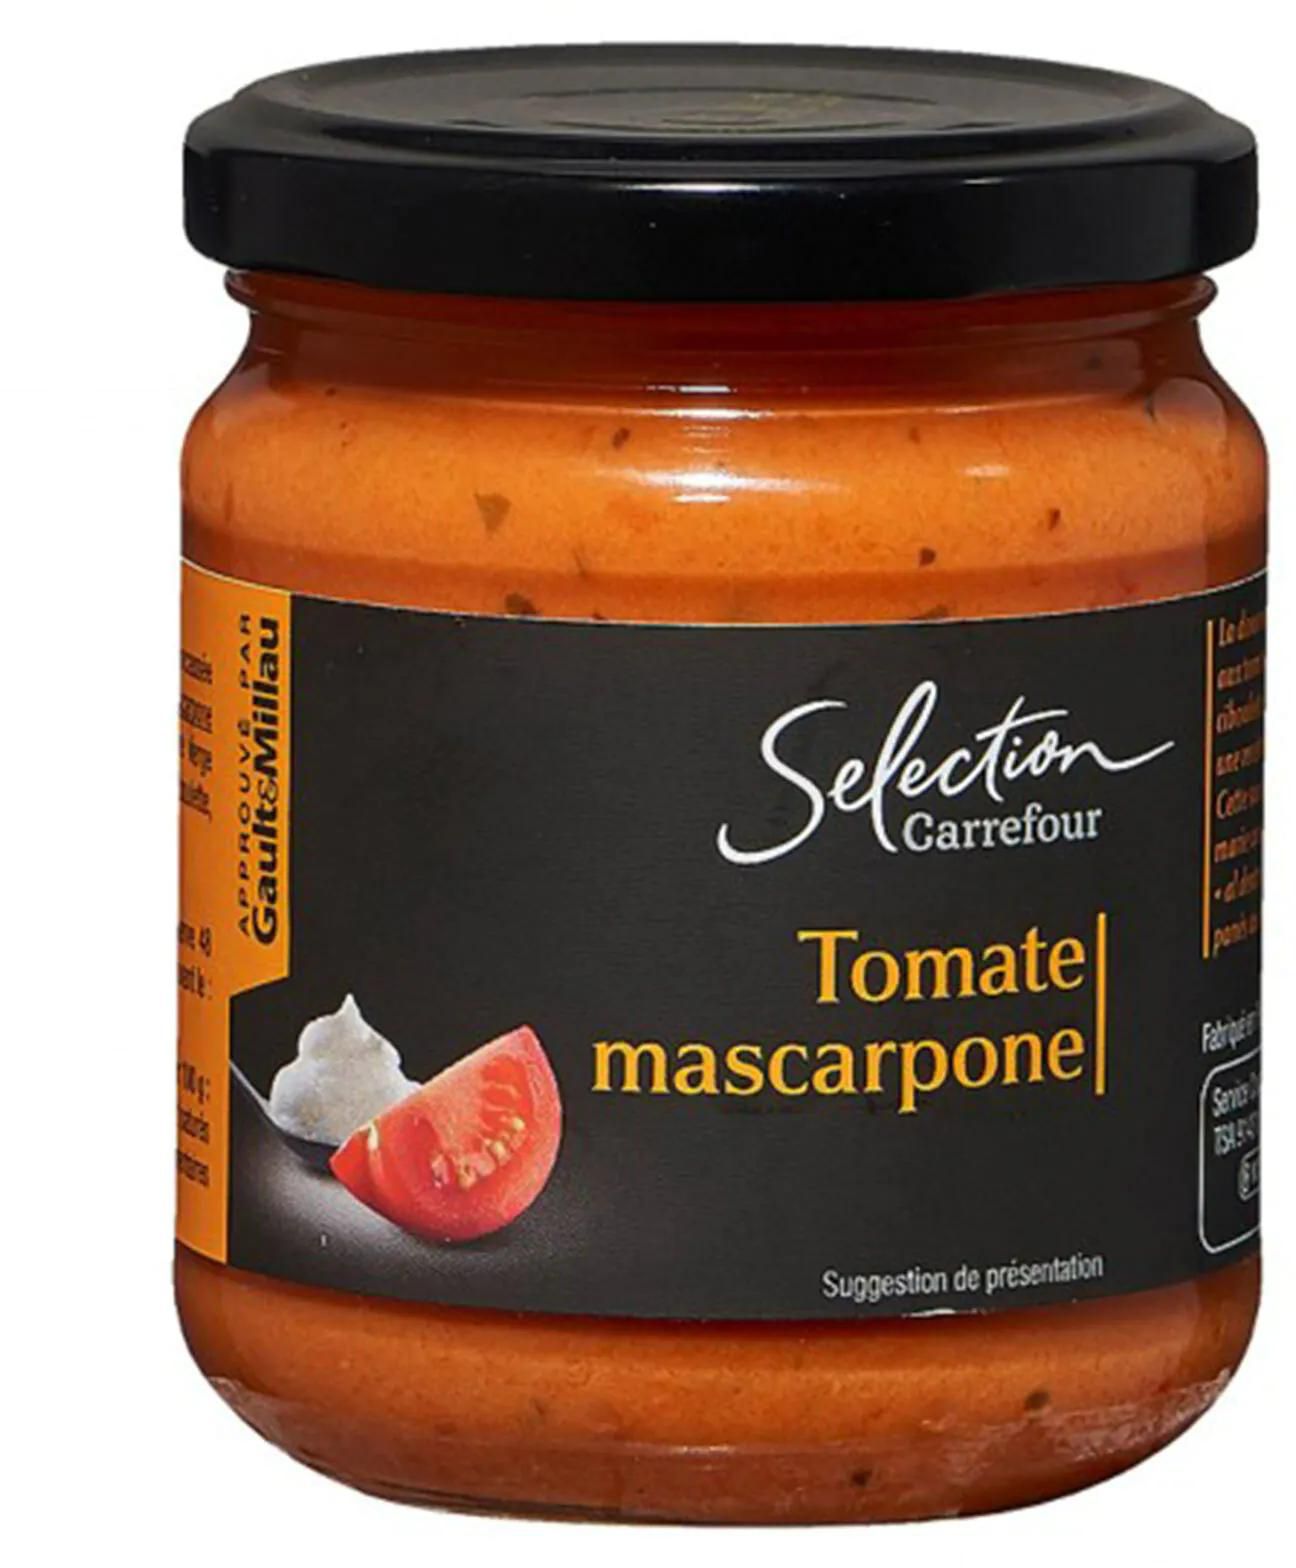 Carrefour selection tomato mascarpone sauce 190 g